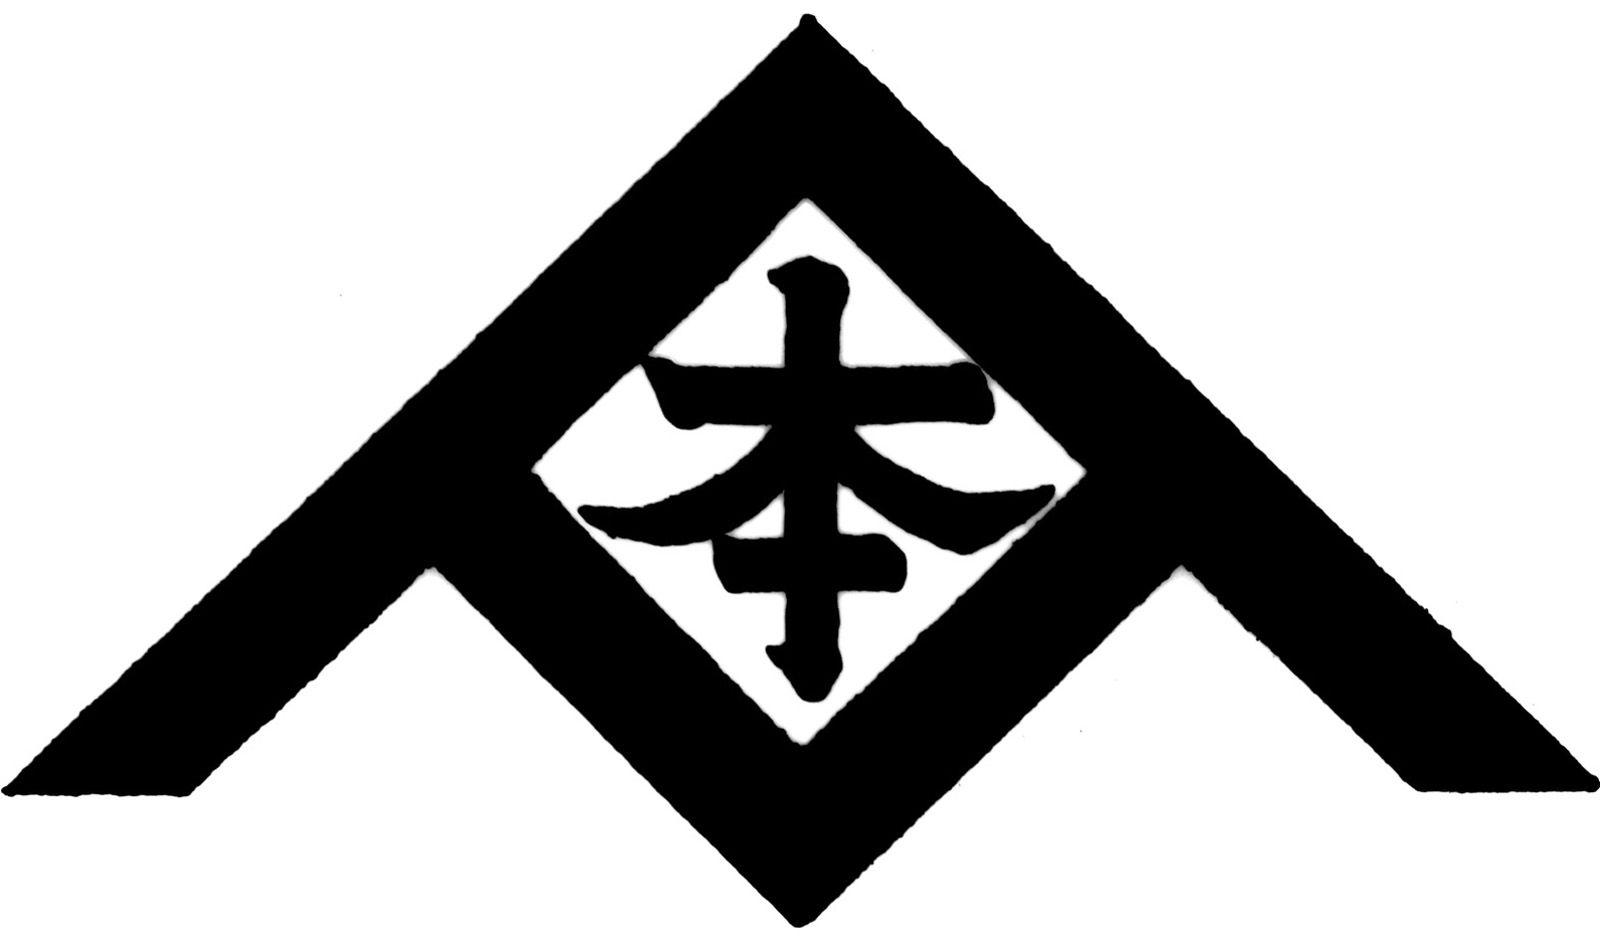 Black Triangle Company Logo - Our Corporate Symbols|Company Information|Takeda Pharmaceutical ...